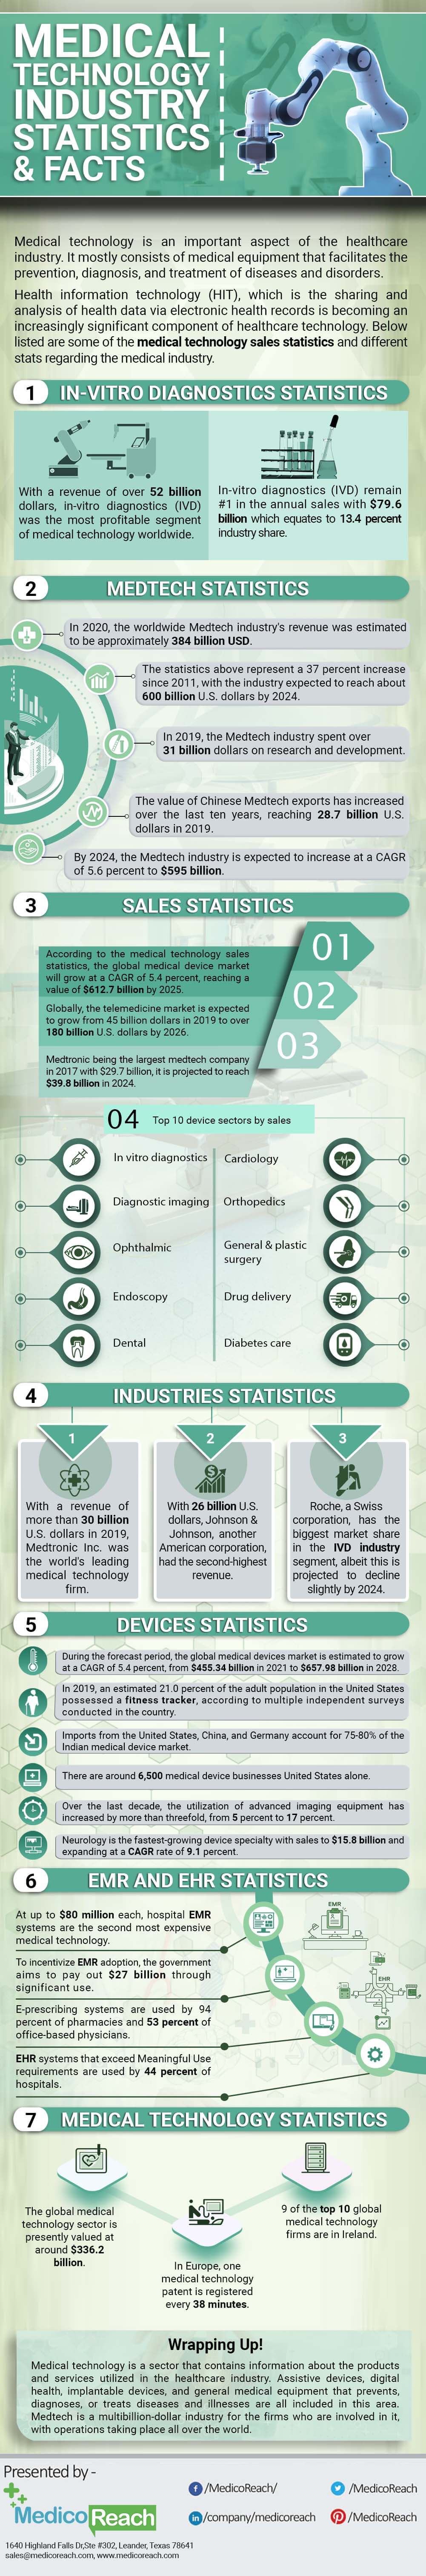 Medical Technology Sales Statistics Infographic